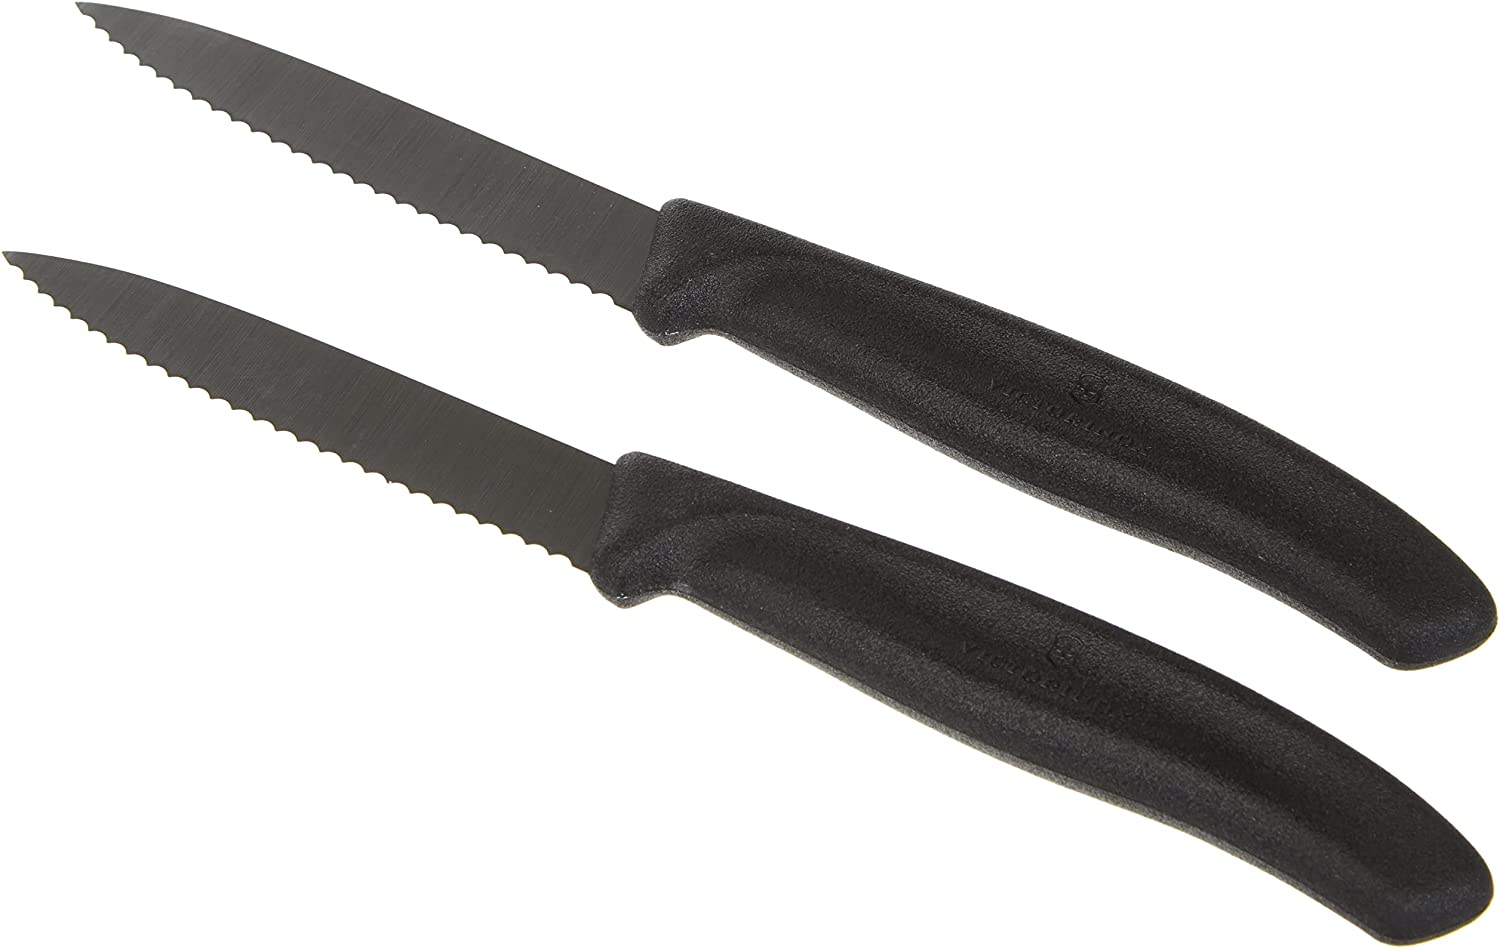 Victorinox Swiss Classic 8 cm Serrated Vegetable Knife - Medium Point - Blade Guard - Dishwasher-Safe - Set of 2